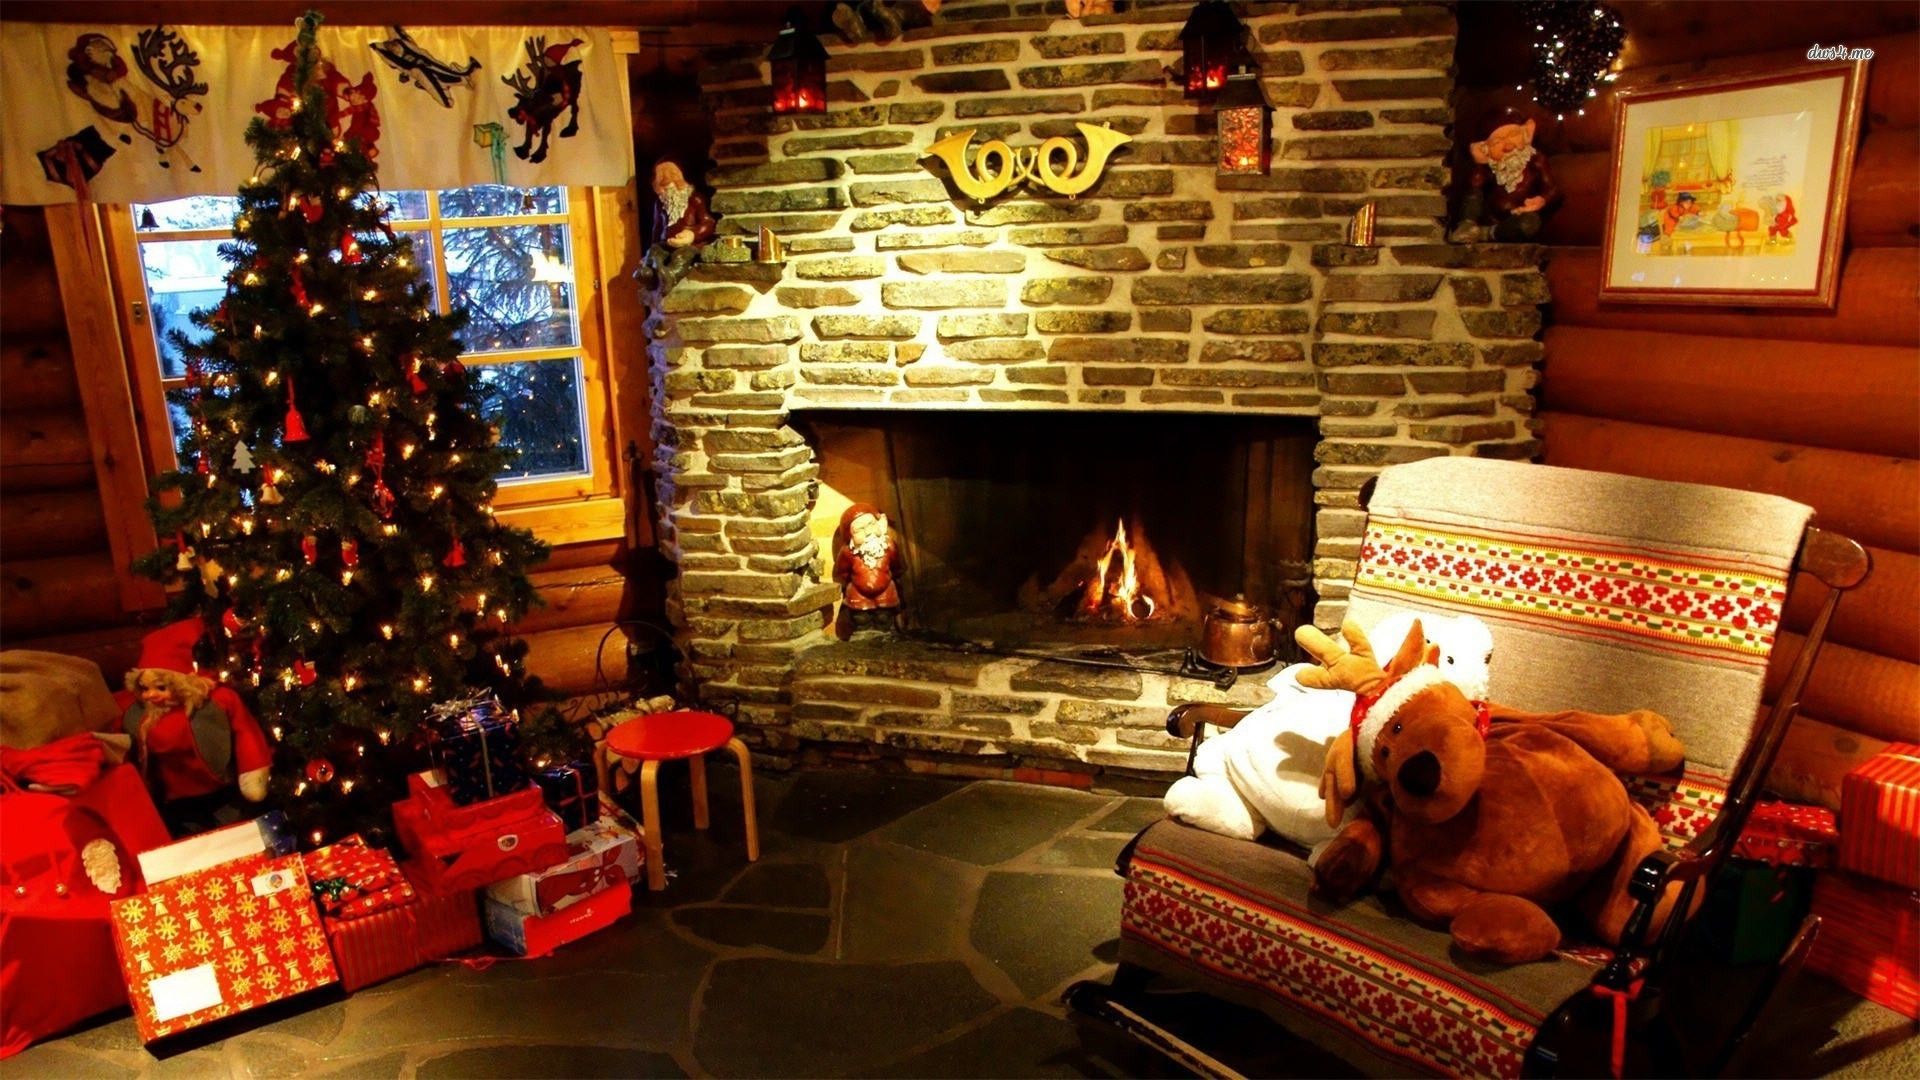 13156-christmas-fireplace-1920x1080-holiday-wallpaper_zpsfbfbcmf0.jpg